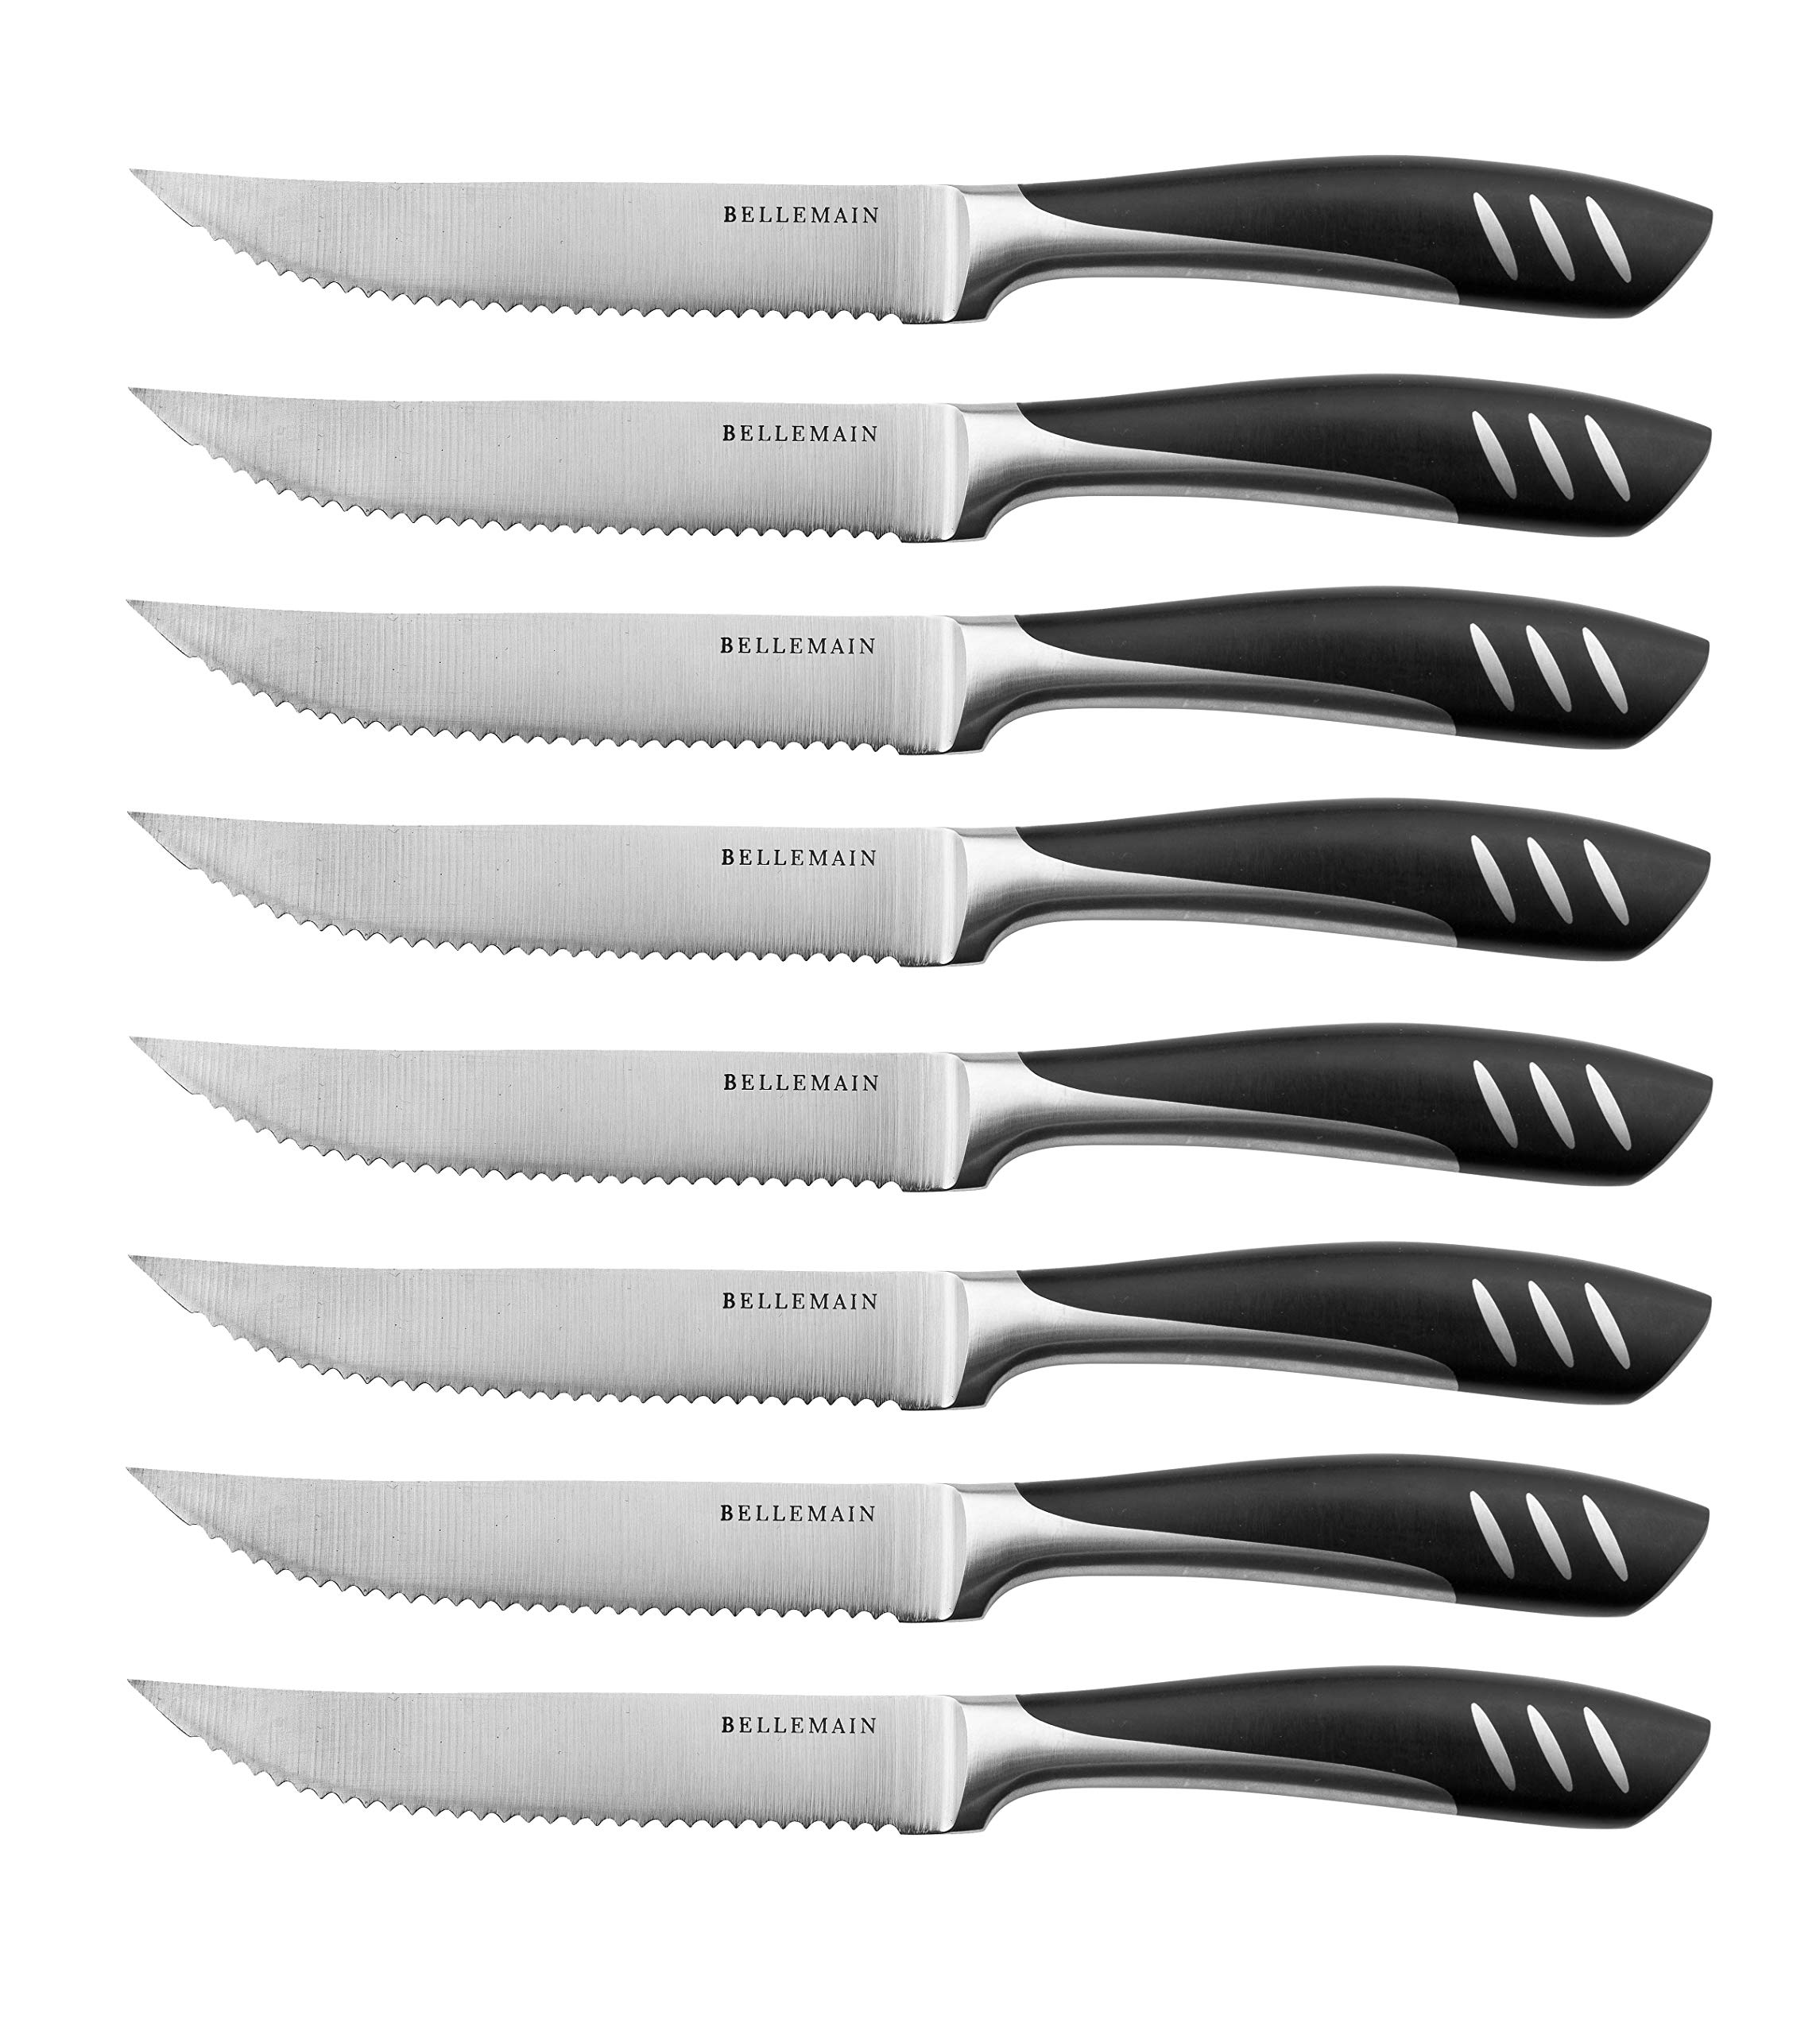 Bellemain Serrated Steak Knives